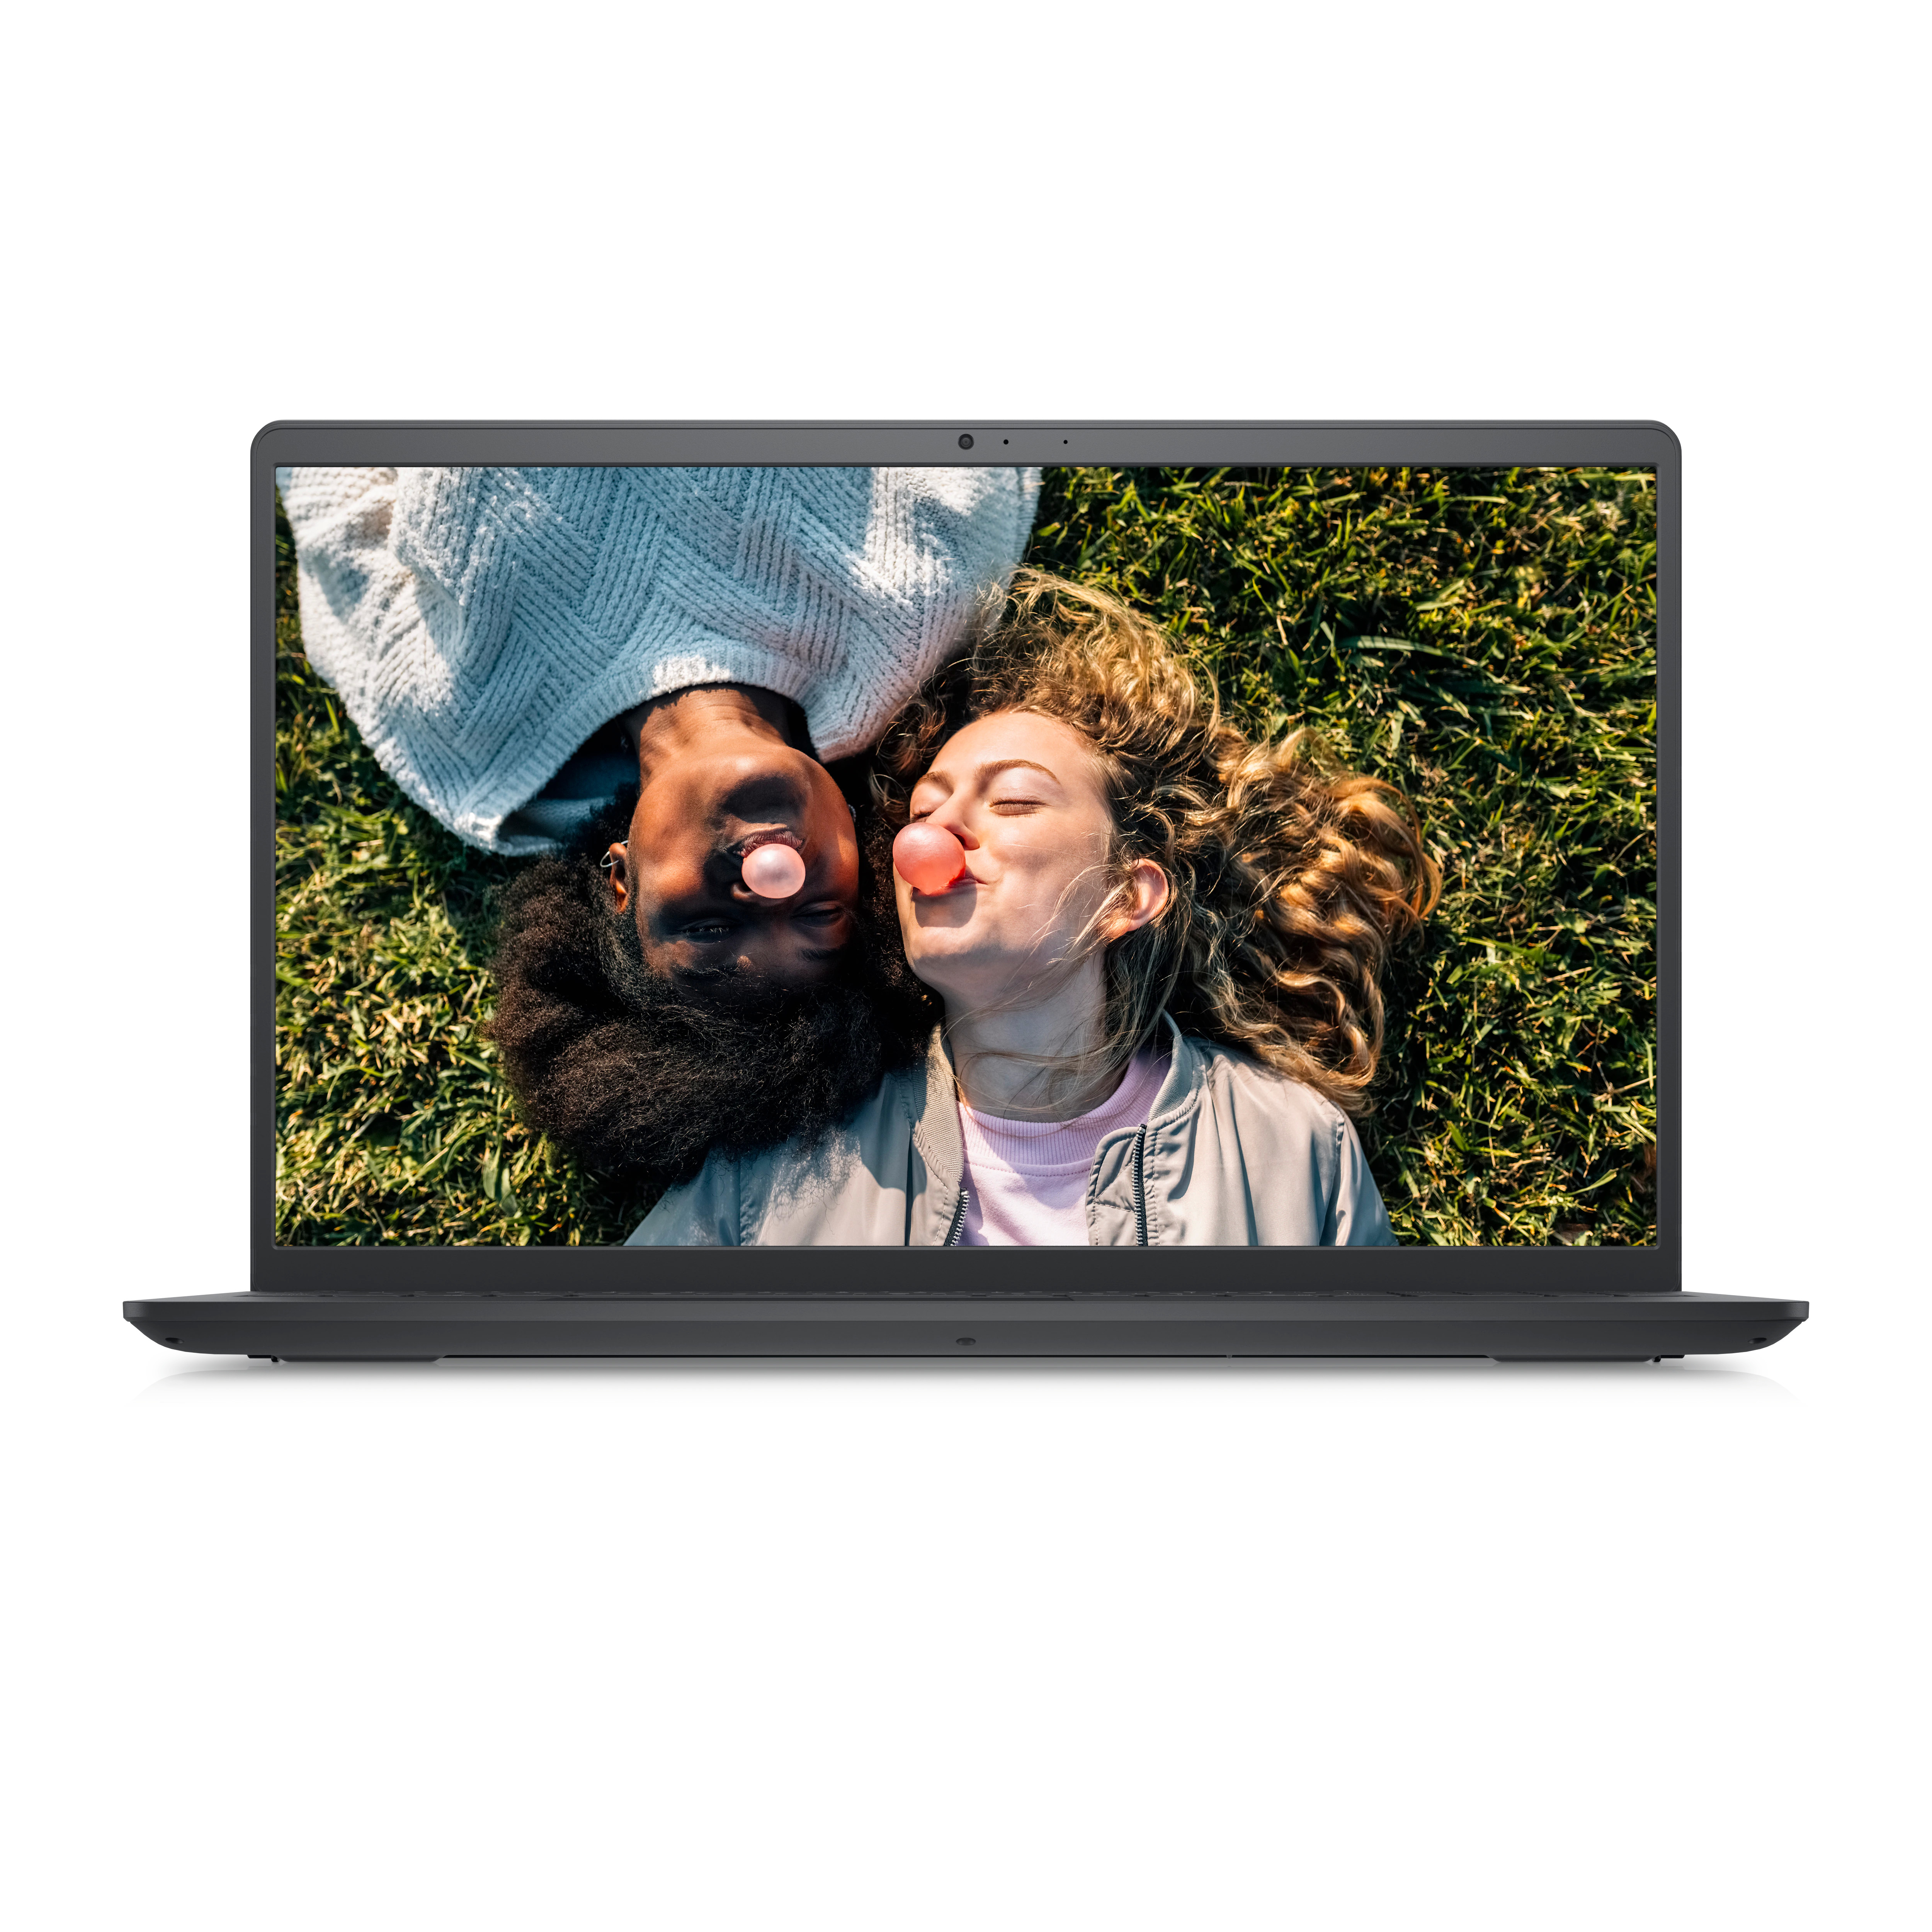 Dell Inspiron 15 3000 Laptop $229